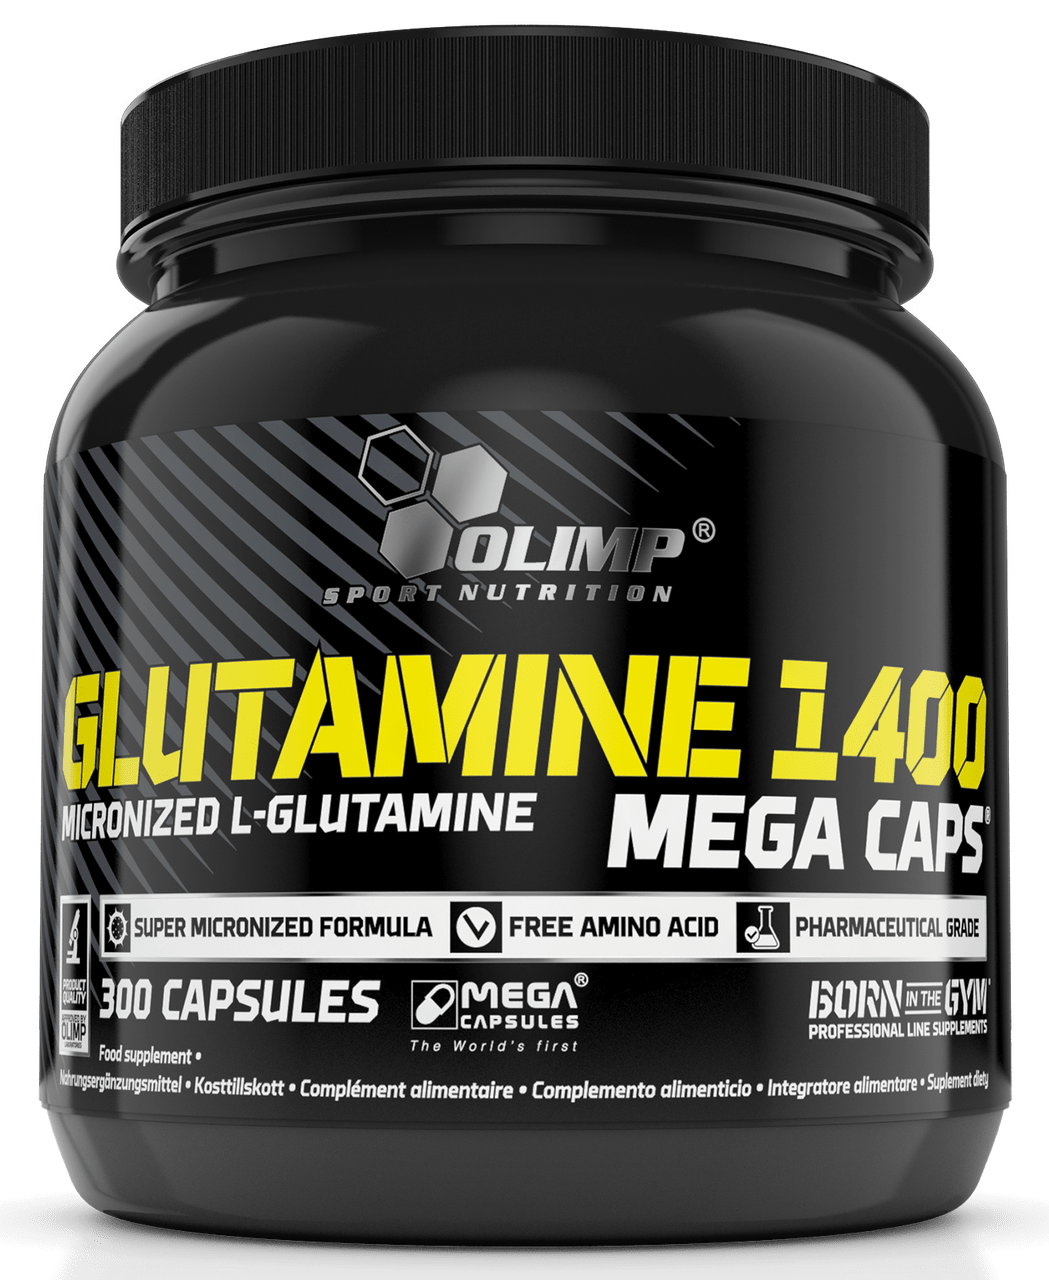 Глютамін Olimp Labs L-Glutamine 1400 mega caps 300 caps,  мл, Olimp Labs. Глютамин. Набор массы Восстановление Антикатаболические свойства 